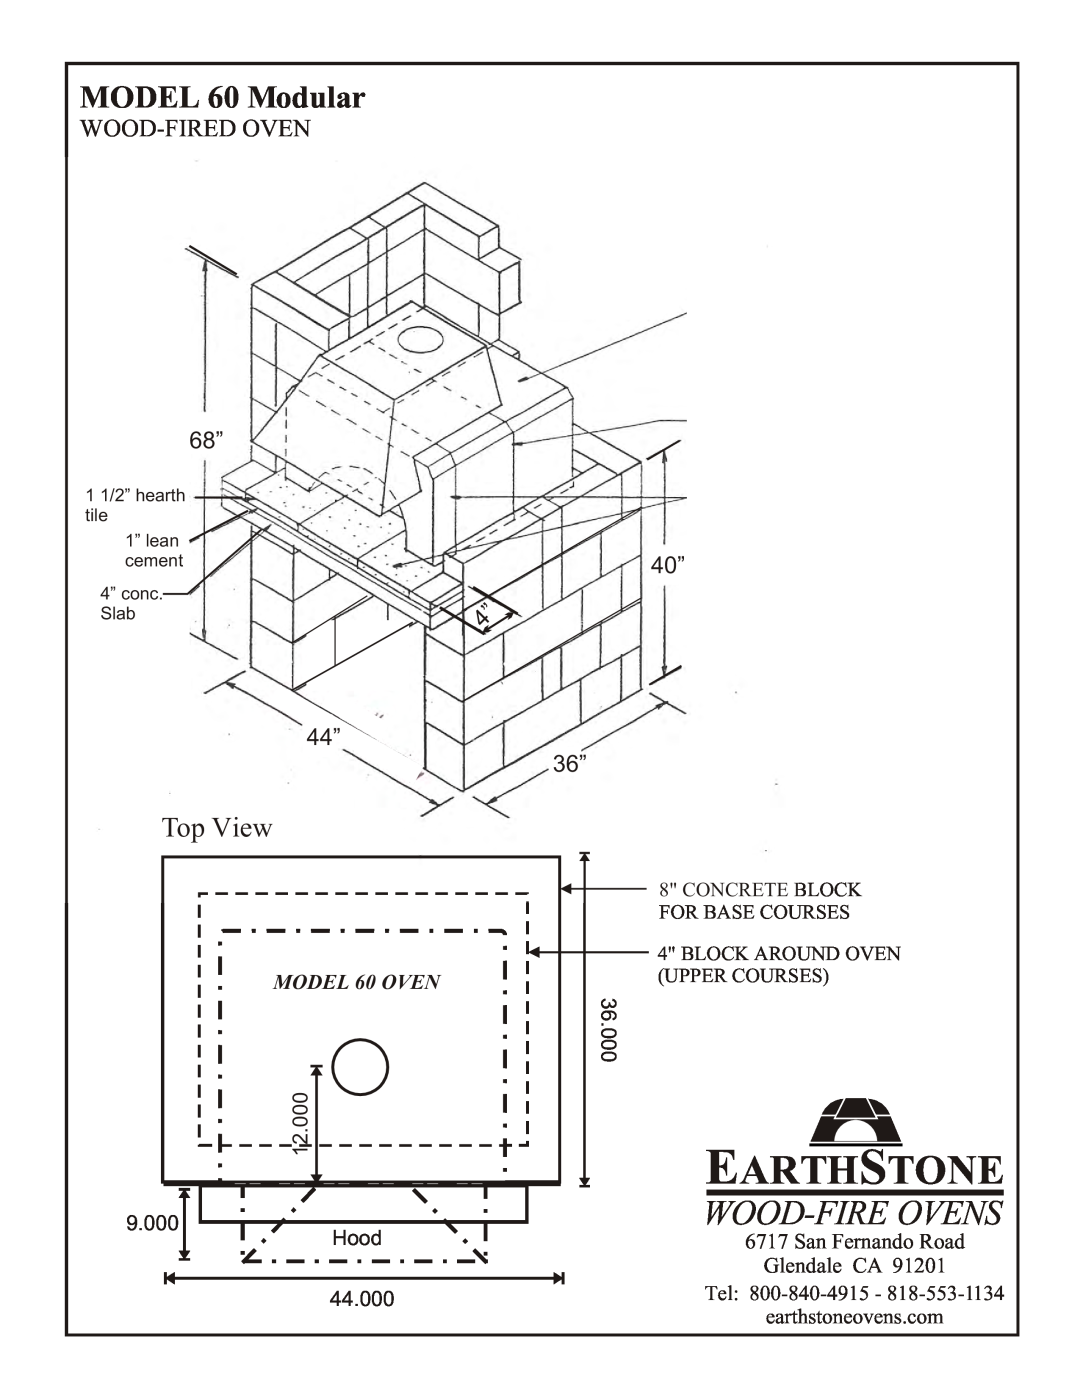 EarthStone Wood-Fireovens, San Fernando Road, Glendale CA, Tel, Earthstone, MODEL 60 Modular, Top View, Wood-Firedoven 